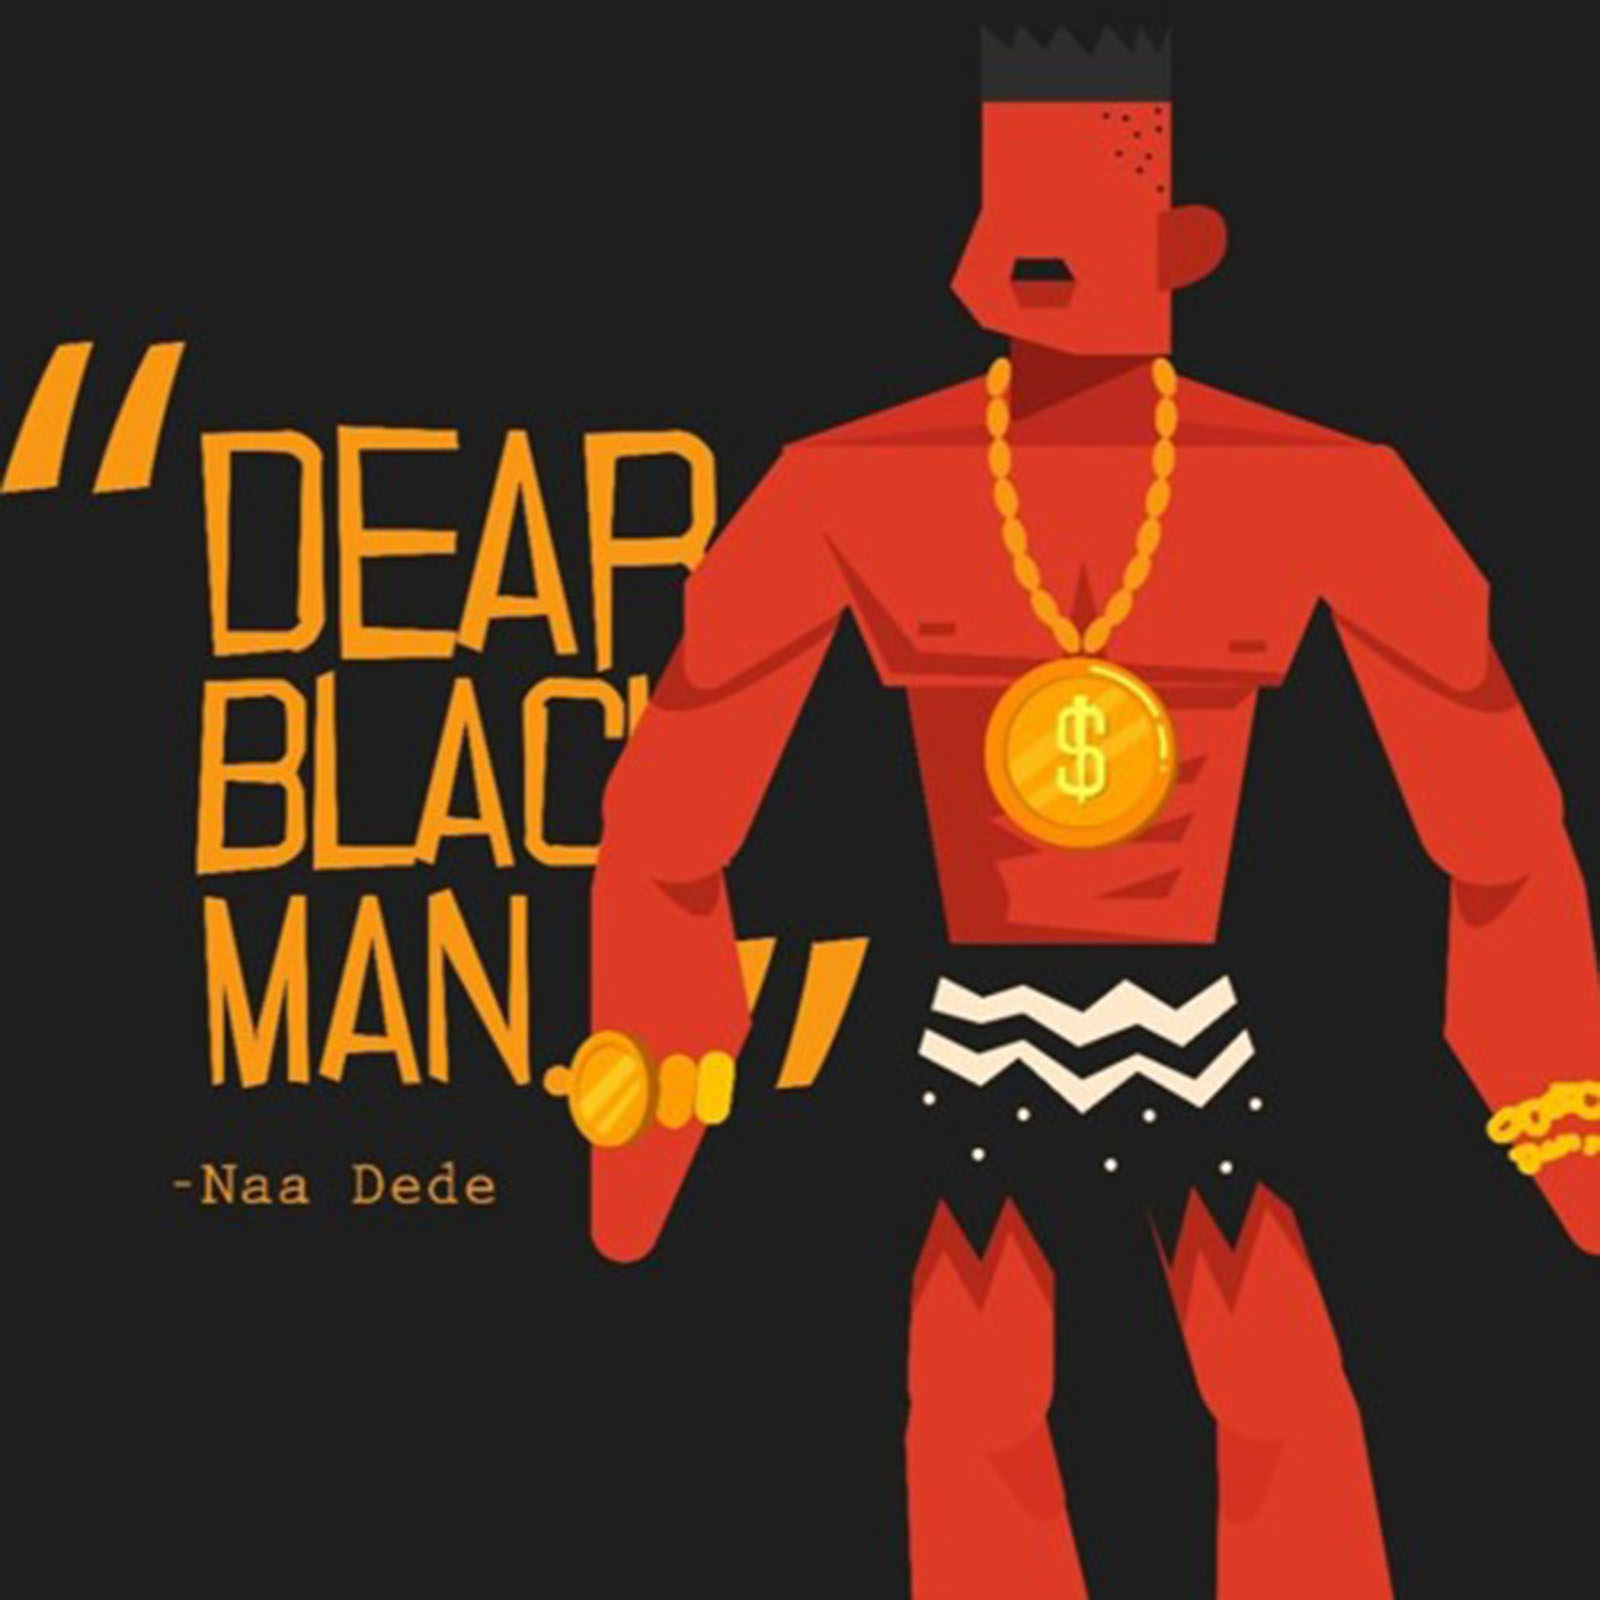 Black Man by Naa Dede